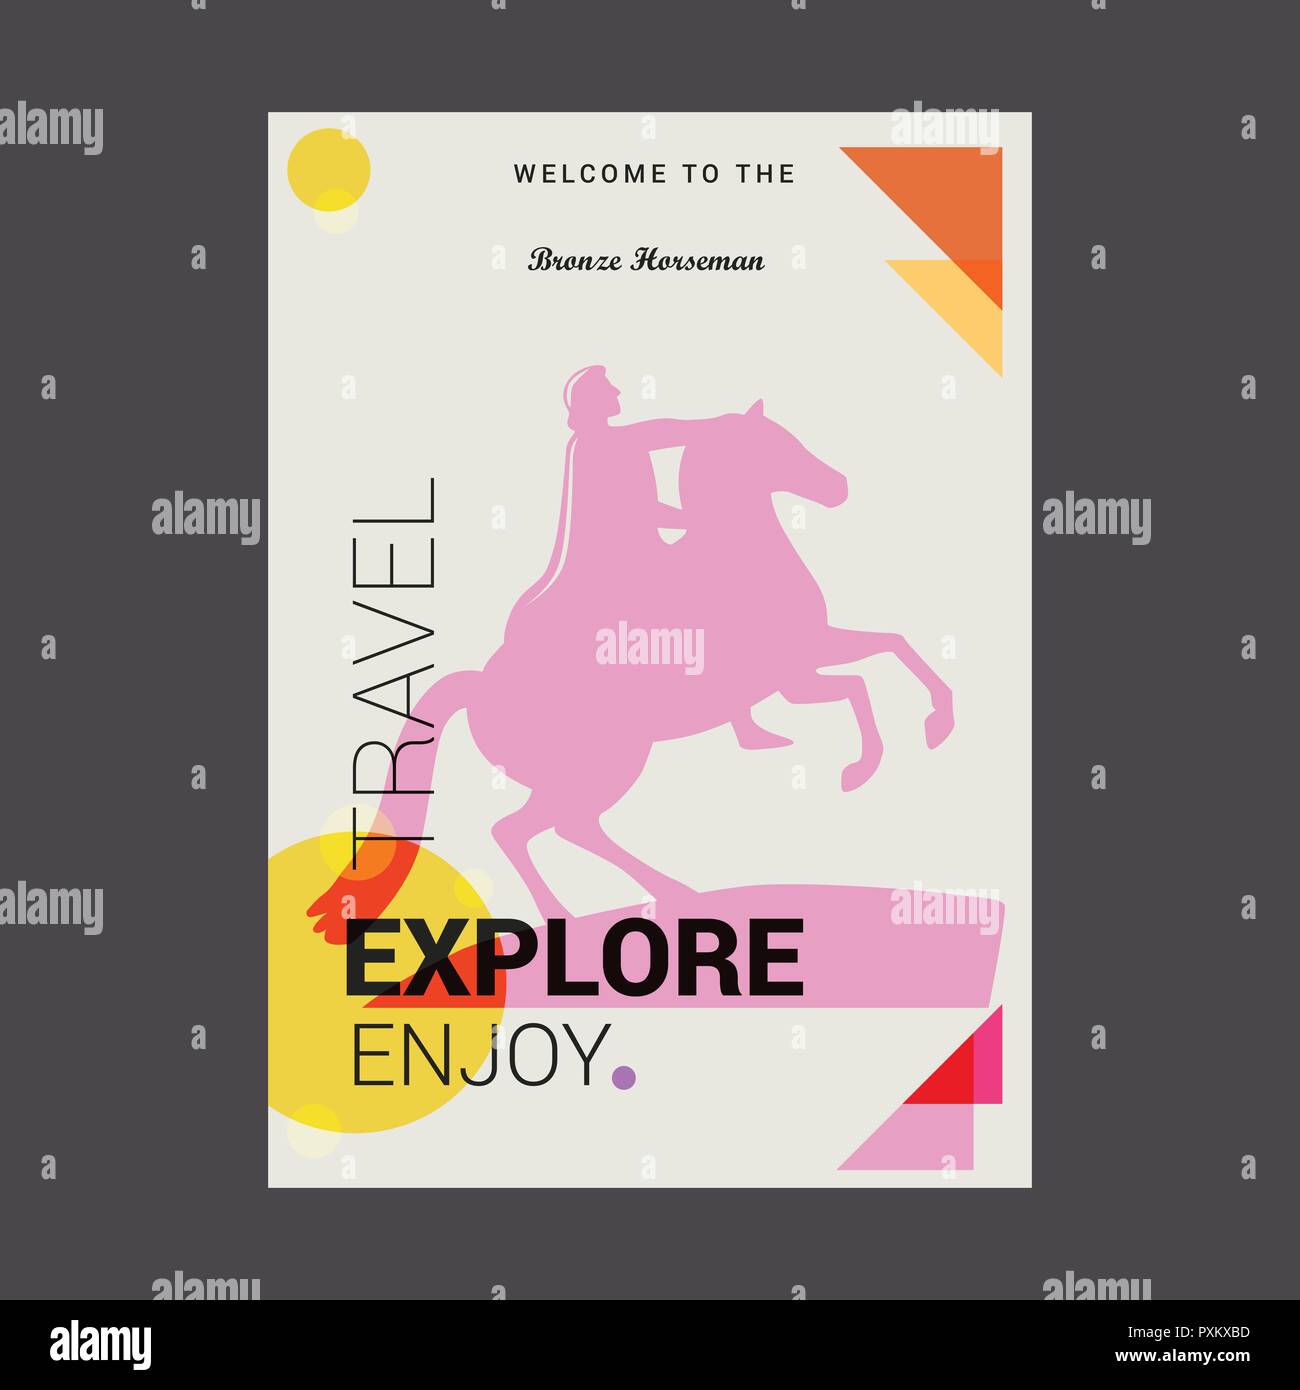 Welcome to The Bronze Horseman St. Petersburg, Russia Explore, Travel Enjoy Poster Template Stock Vector